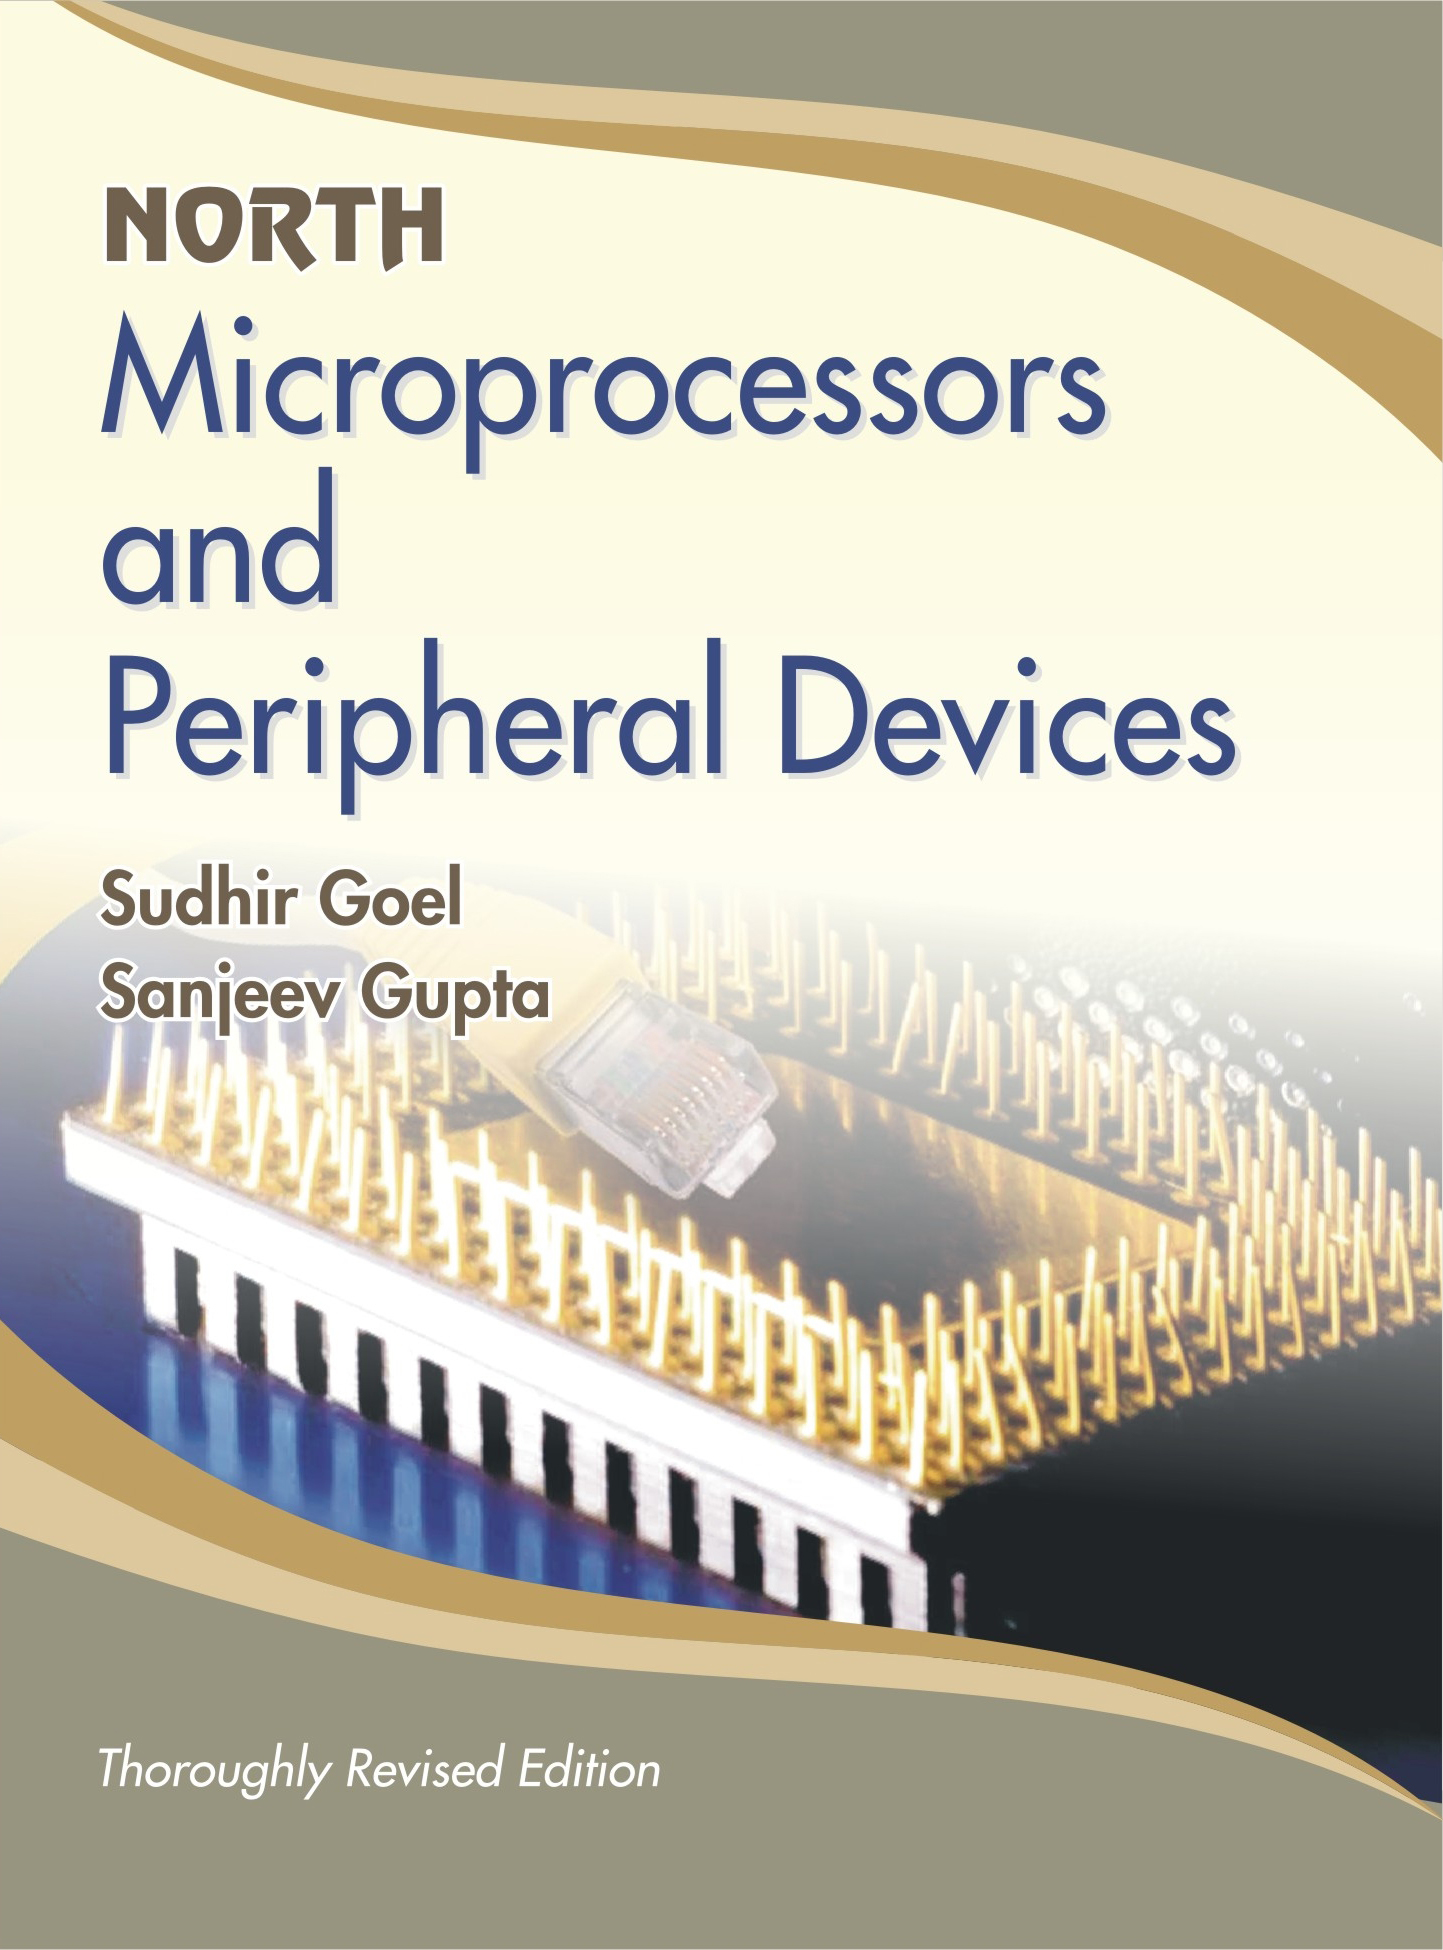 Microprocessor Peripherals & Devices